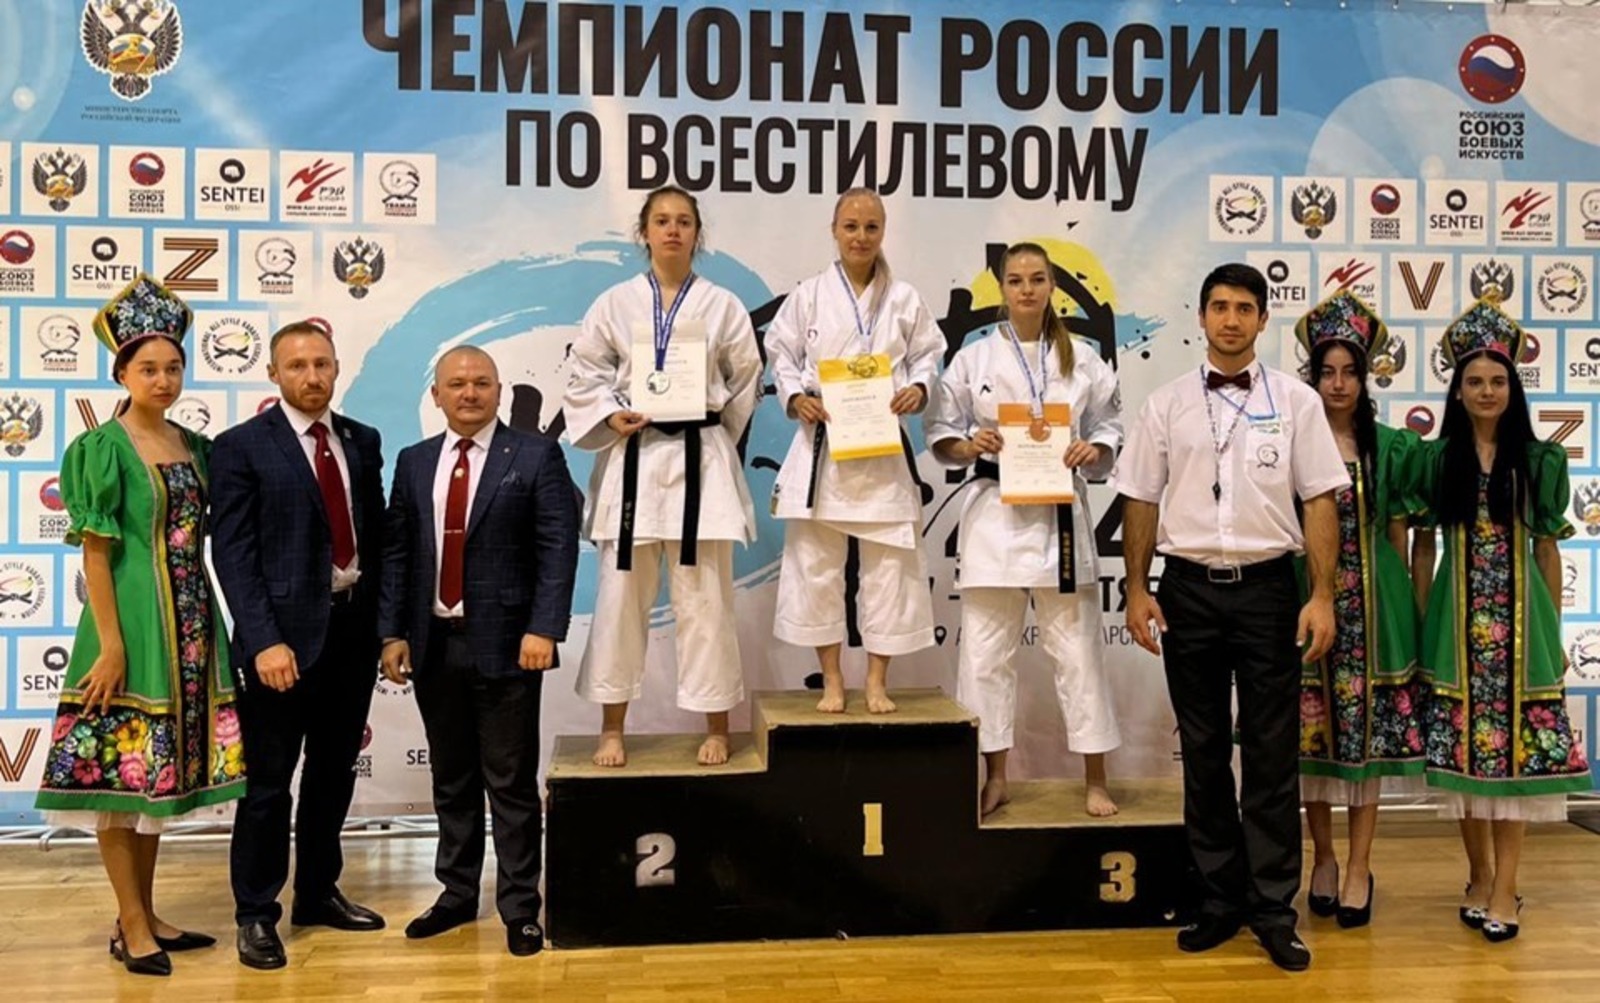 Спортсменки Башкирии выиграли золото на чемпионате России по всестилевому карате